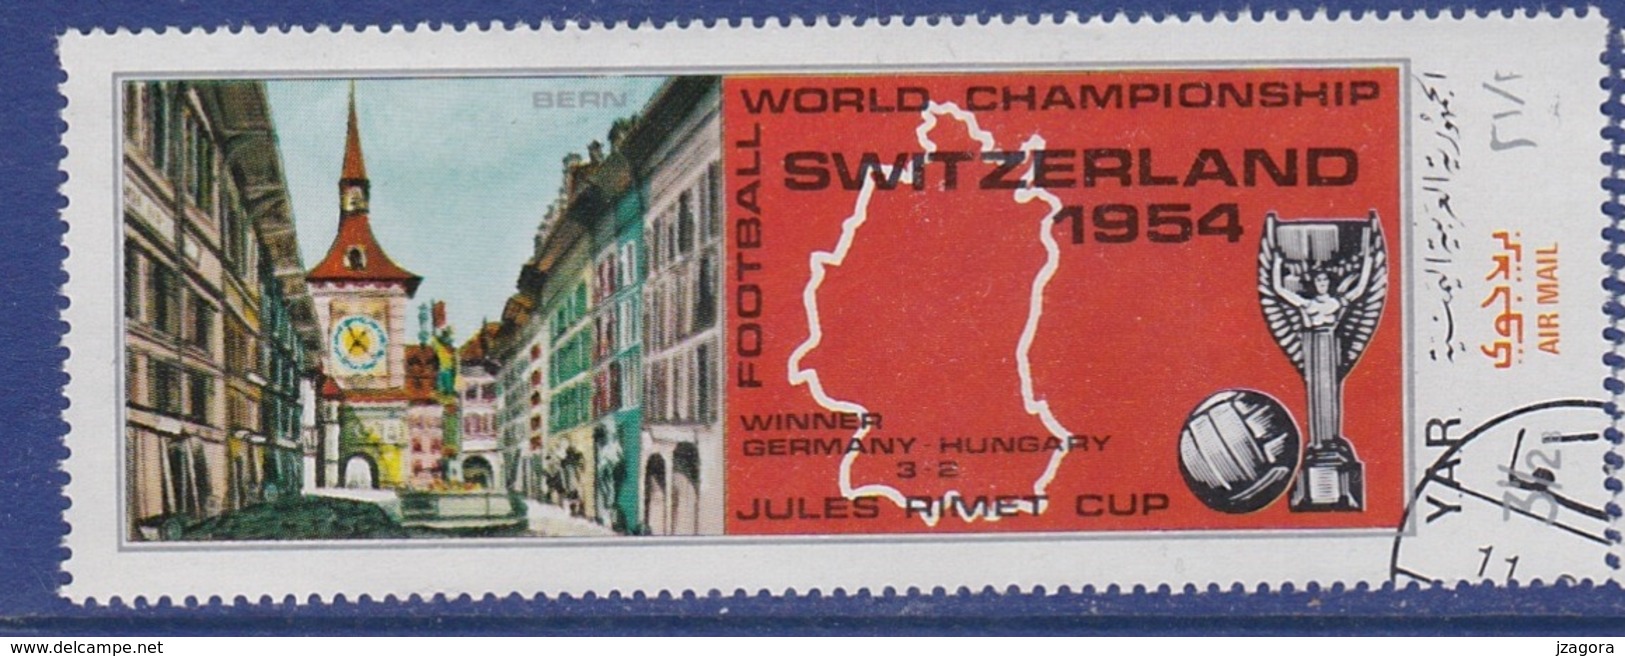 SOCCER FOOTBALL WORLD CHAMPIONSHIP MUNDIAL SWITZERLAND 1954 - YAR YEMEN - 1954 – Zwitserland